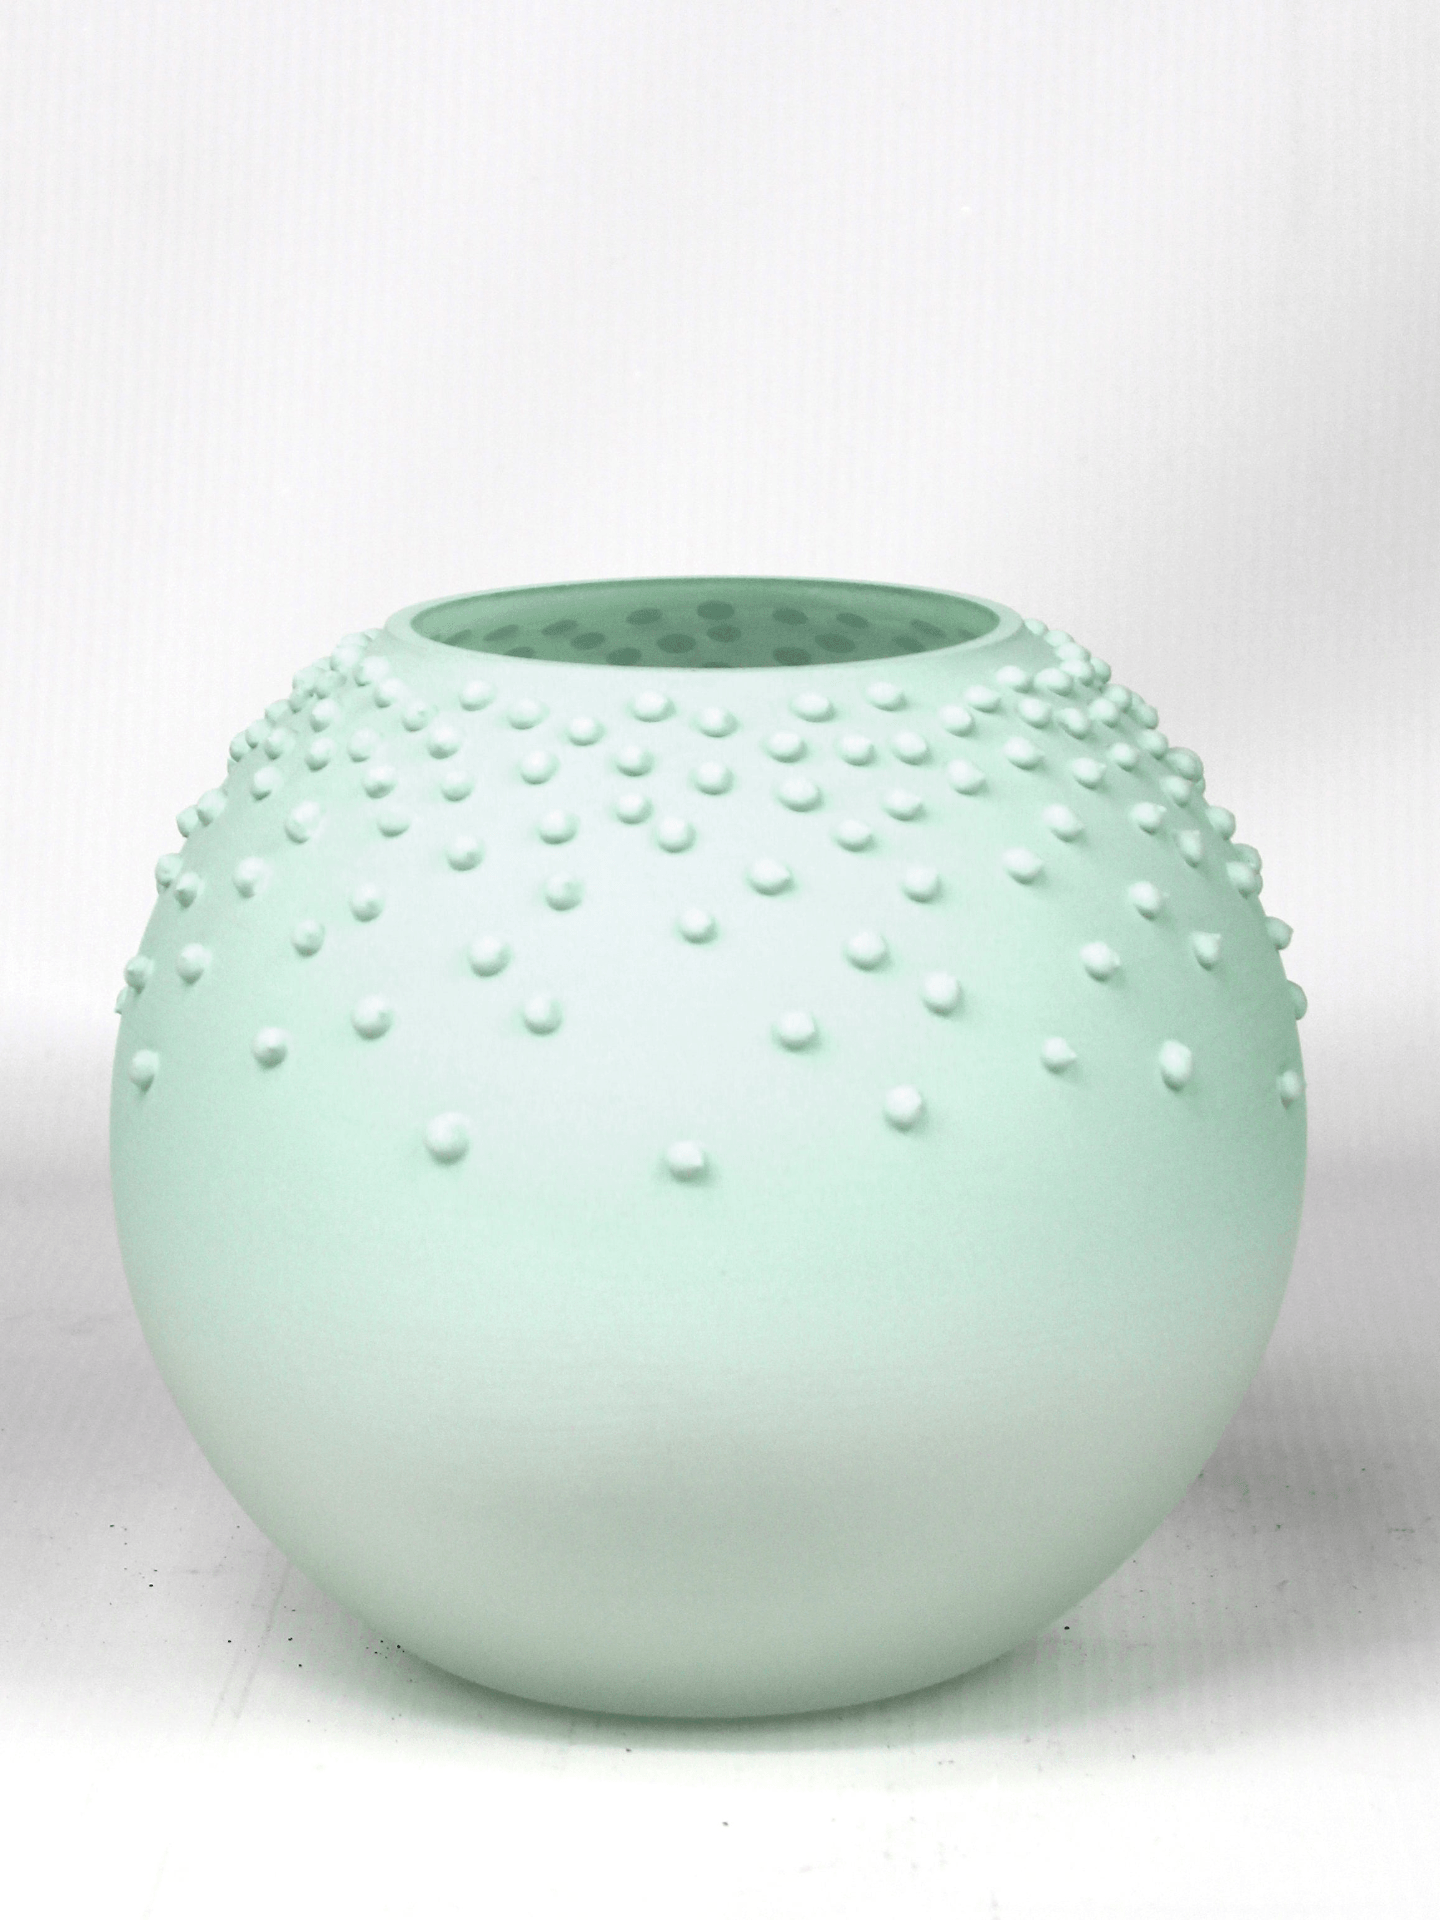 table turquoise art decorative glass vase 5578/180/sh350.1  